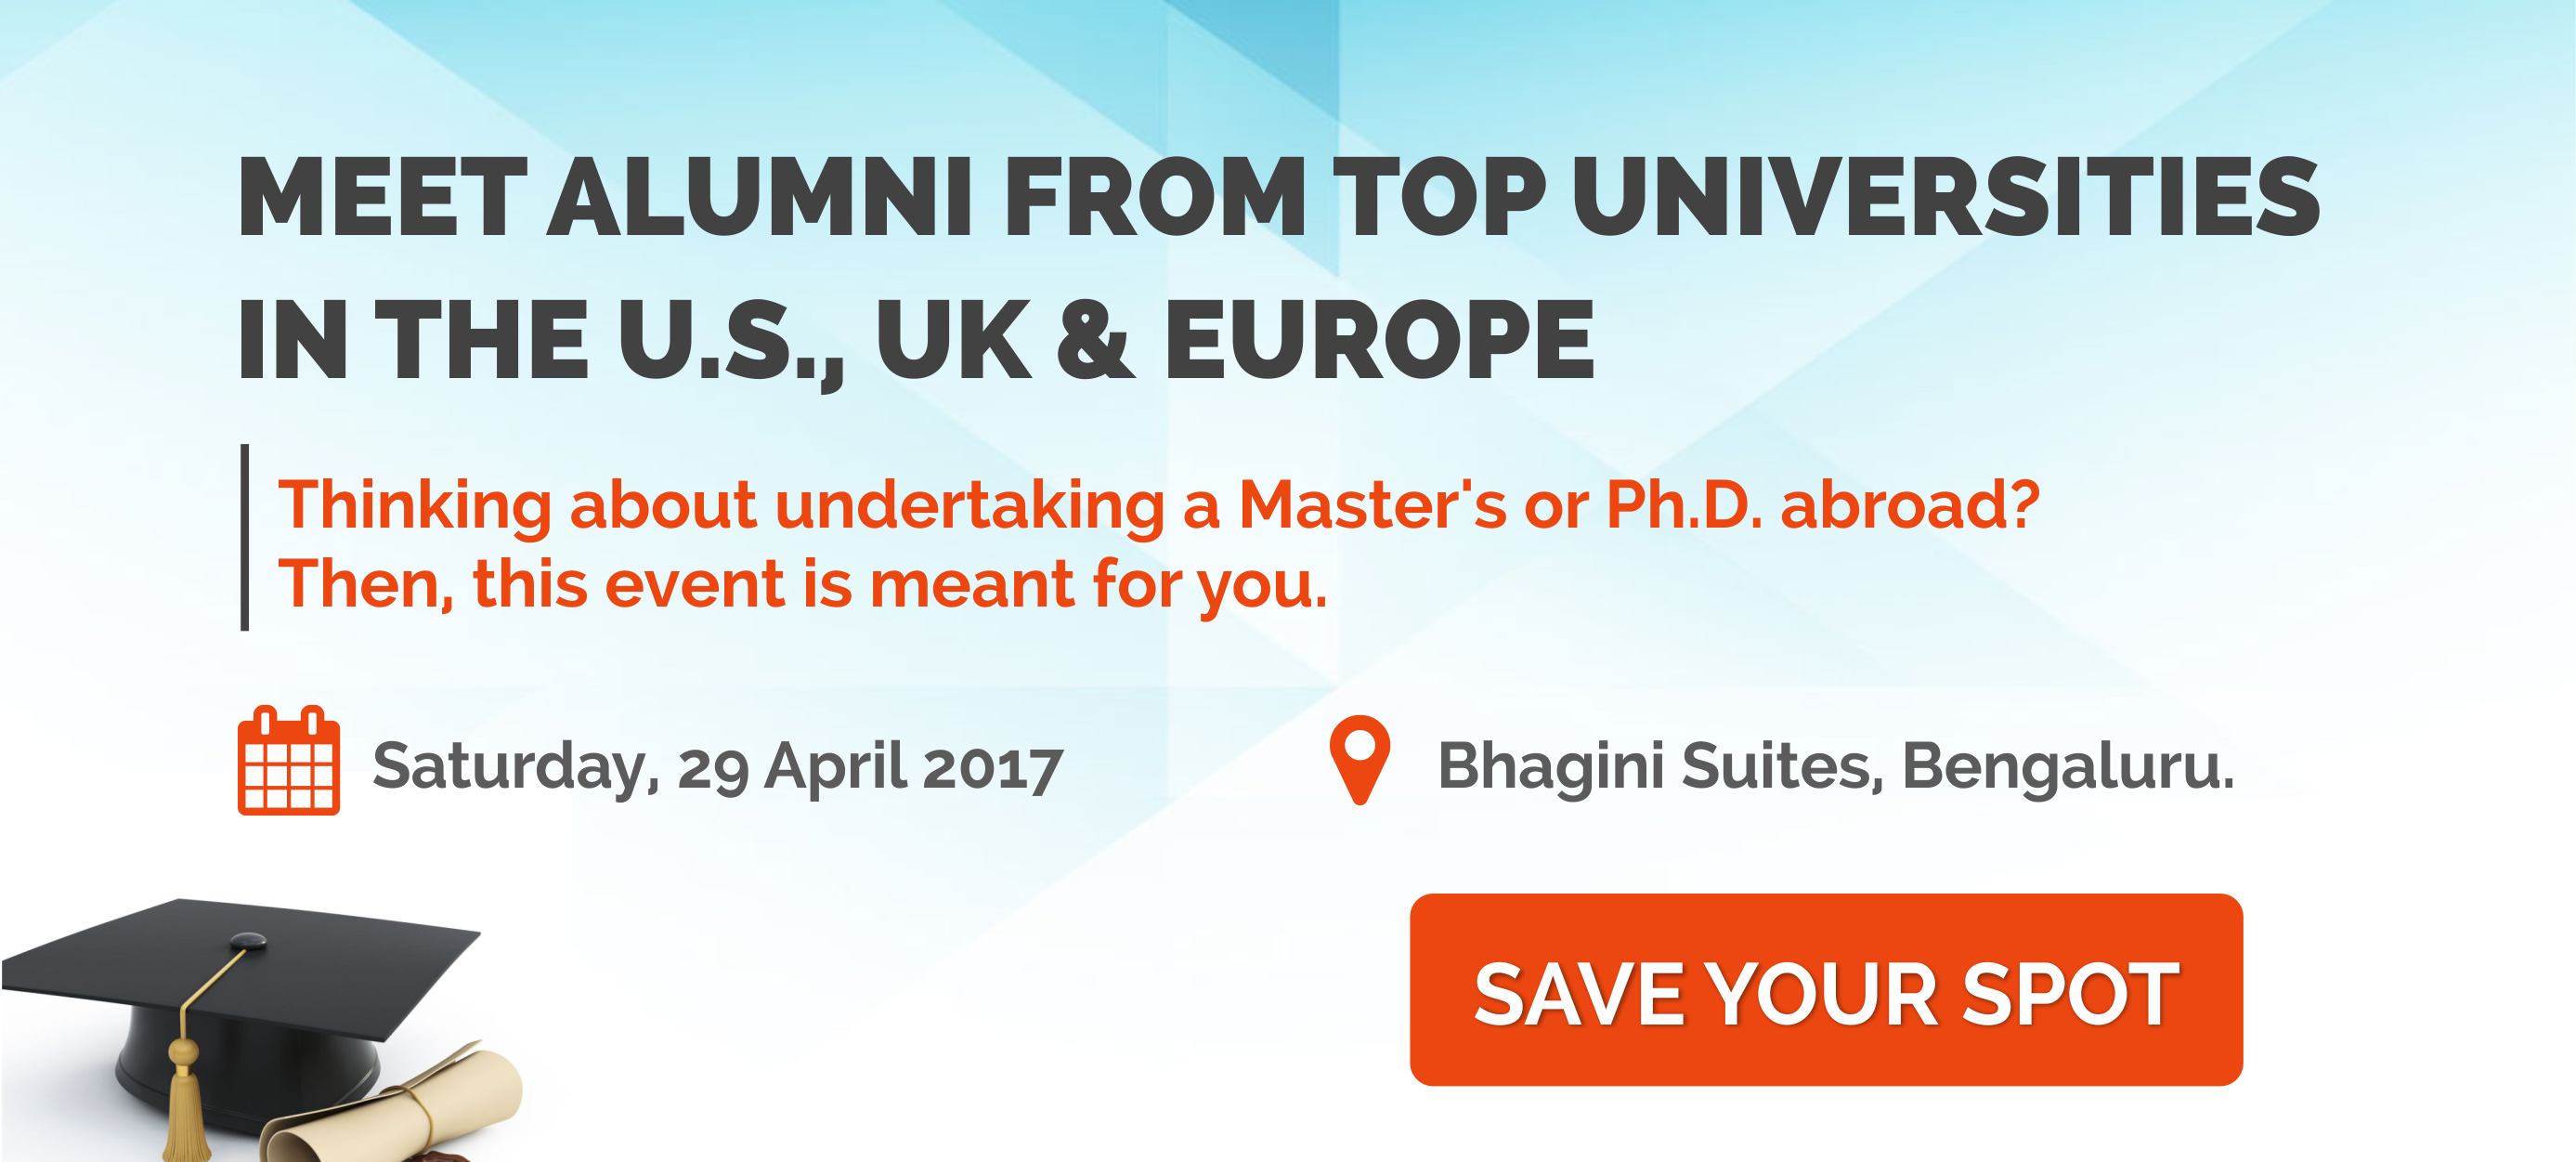 Meet Alumni from Top Universities in the U.S., UK & Europe, Bangalore, Karnataka, India